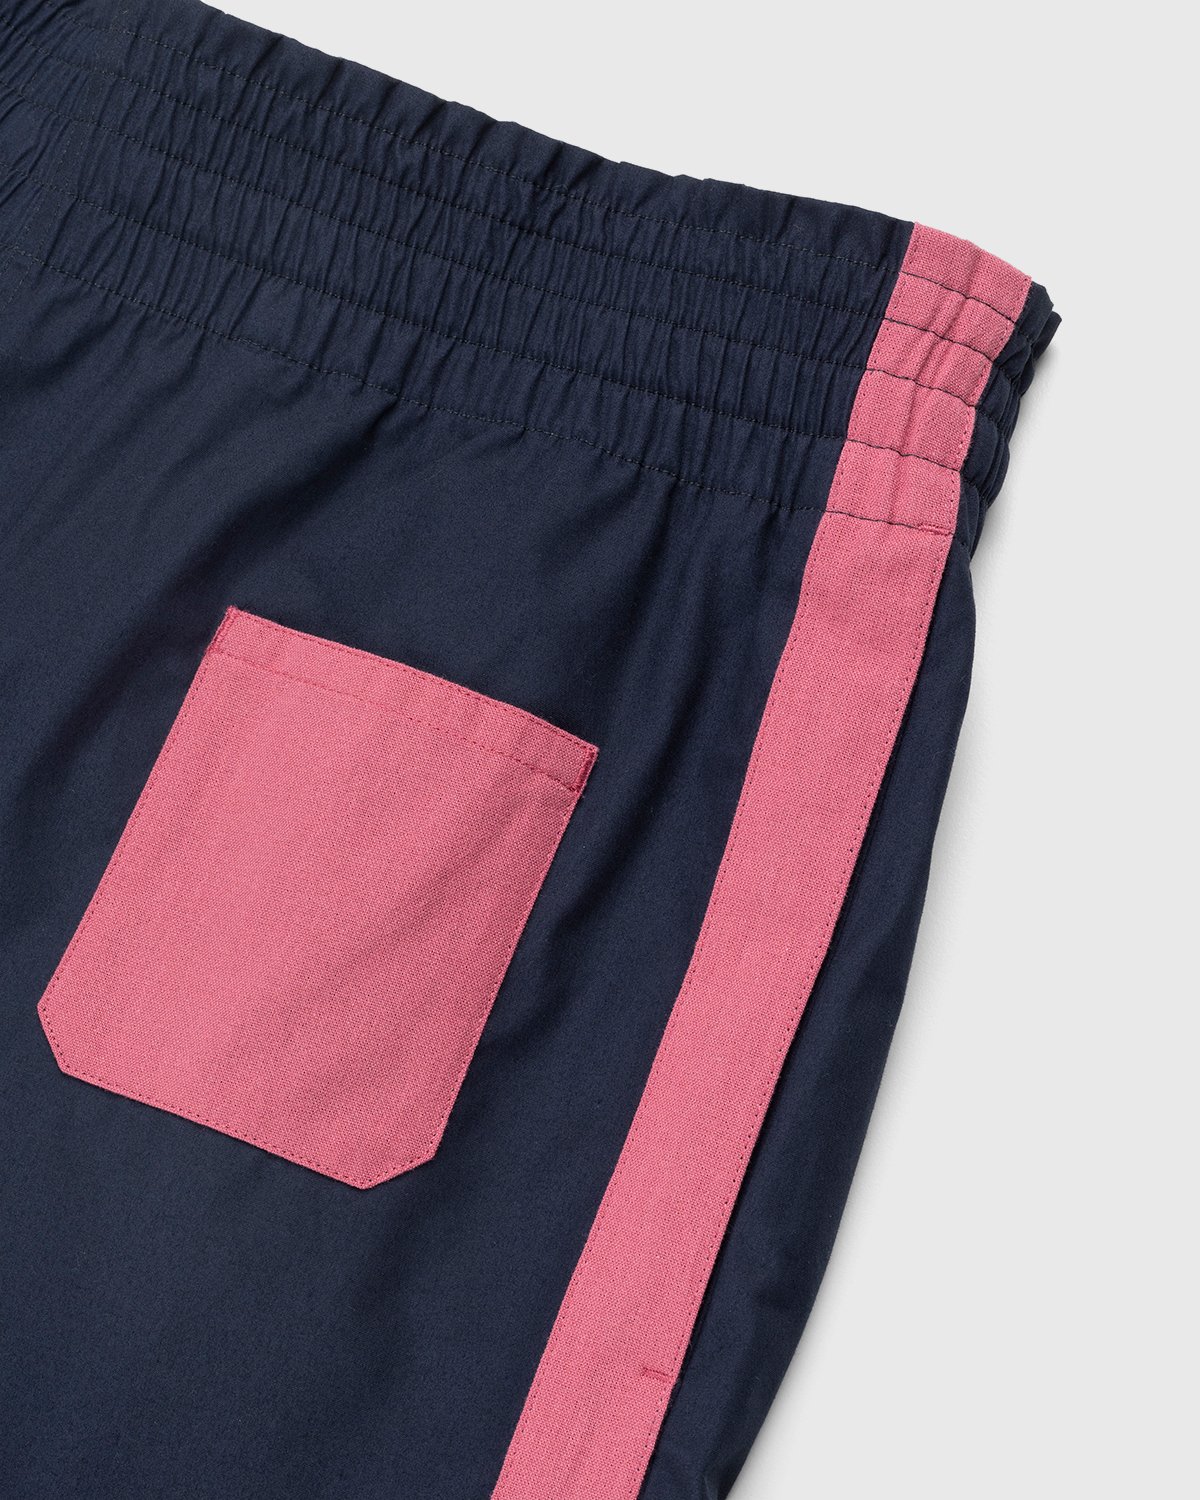 Acne Studios - Elastic Waist Contrast Shorts Navy - Clothing - Blue - Image 4